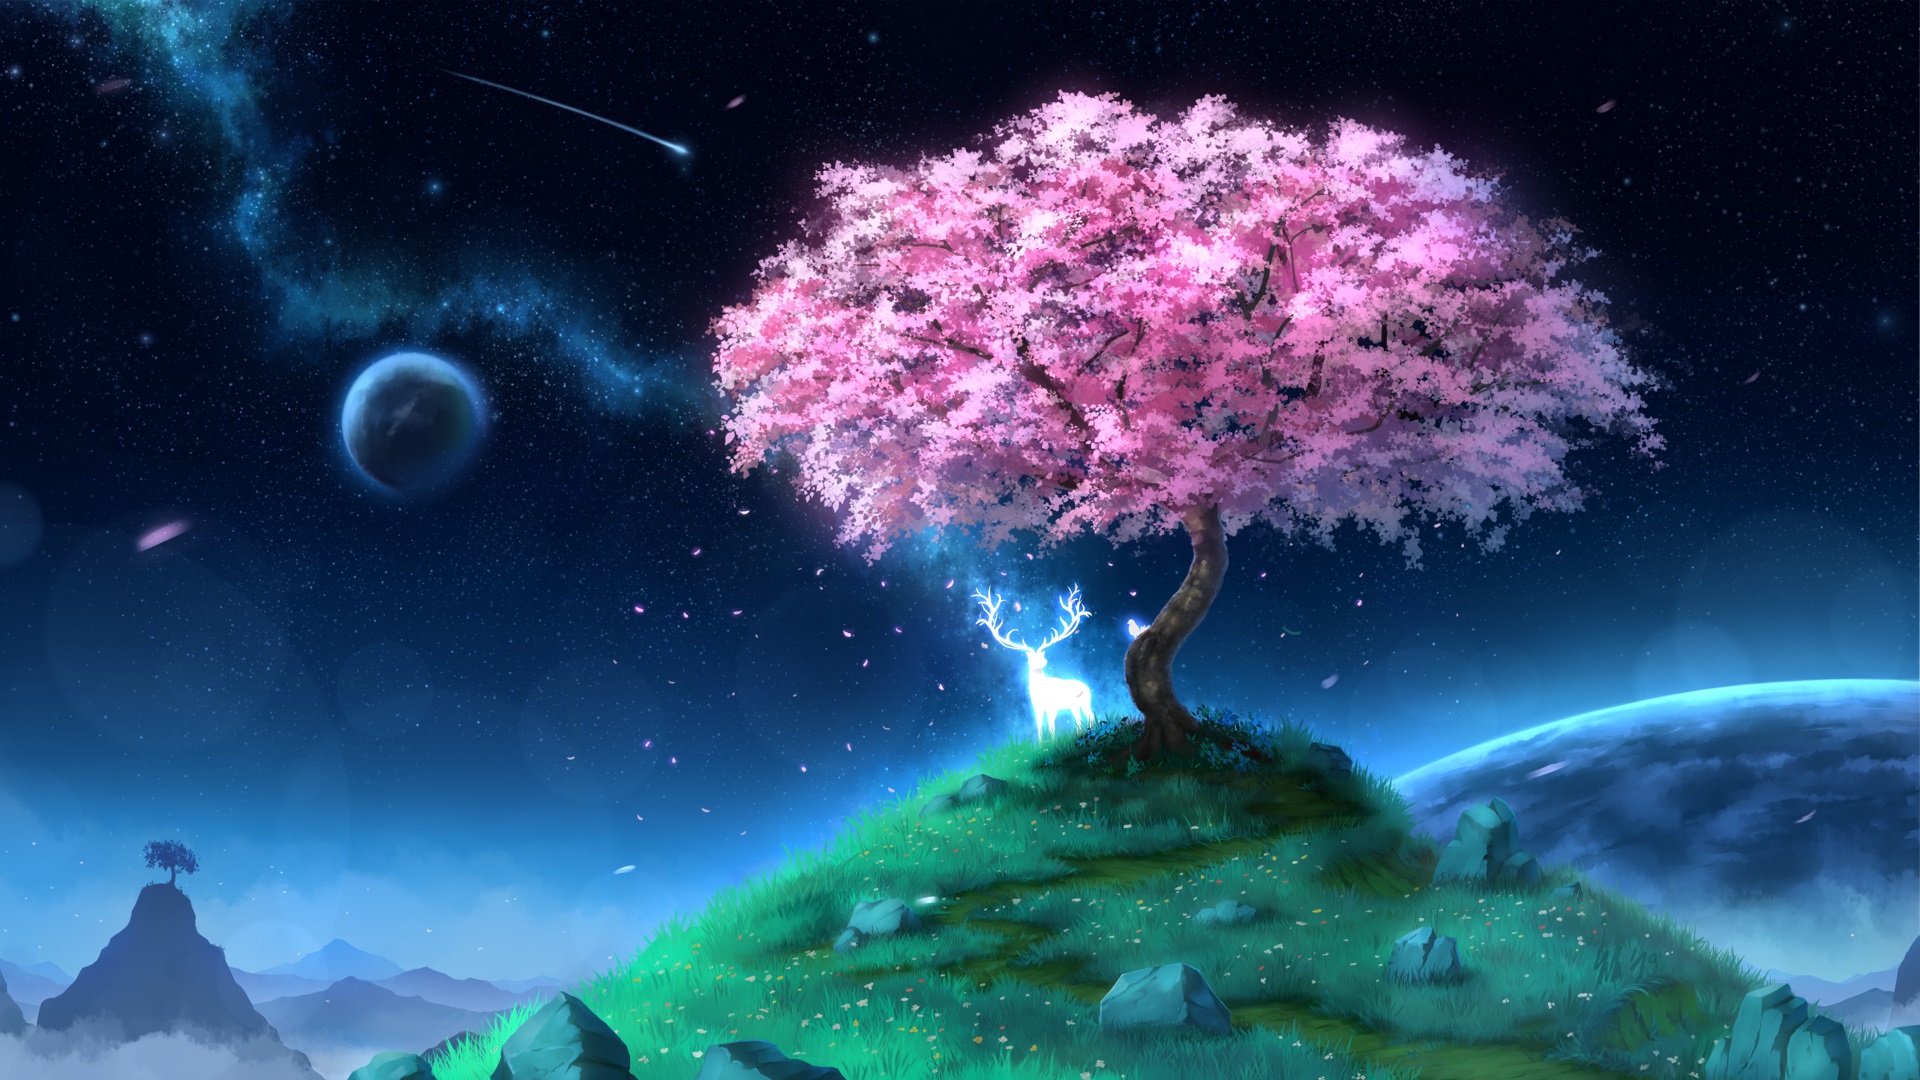 PC Wallpapers starry sky, planet, anime, tree, deer, shooting star